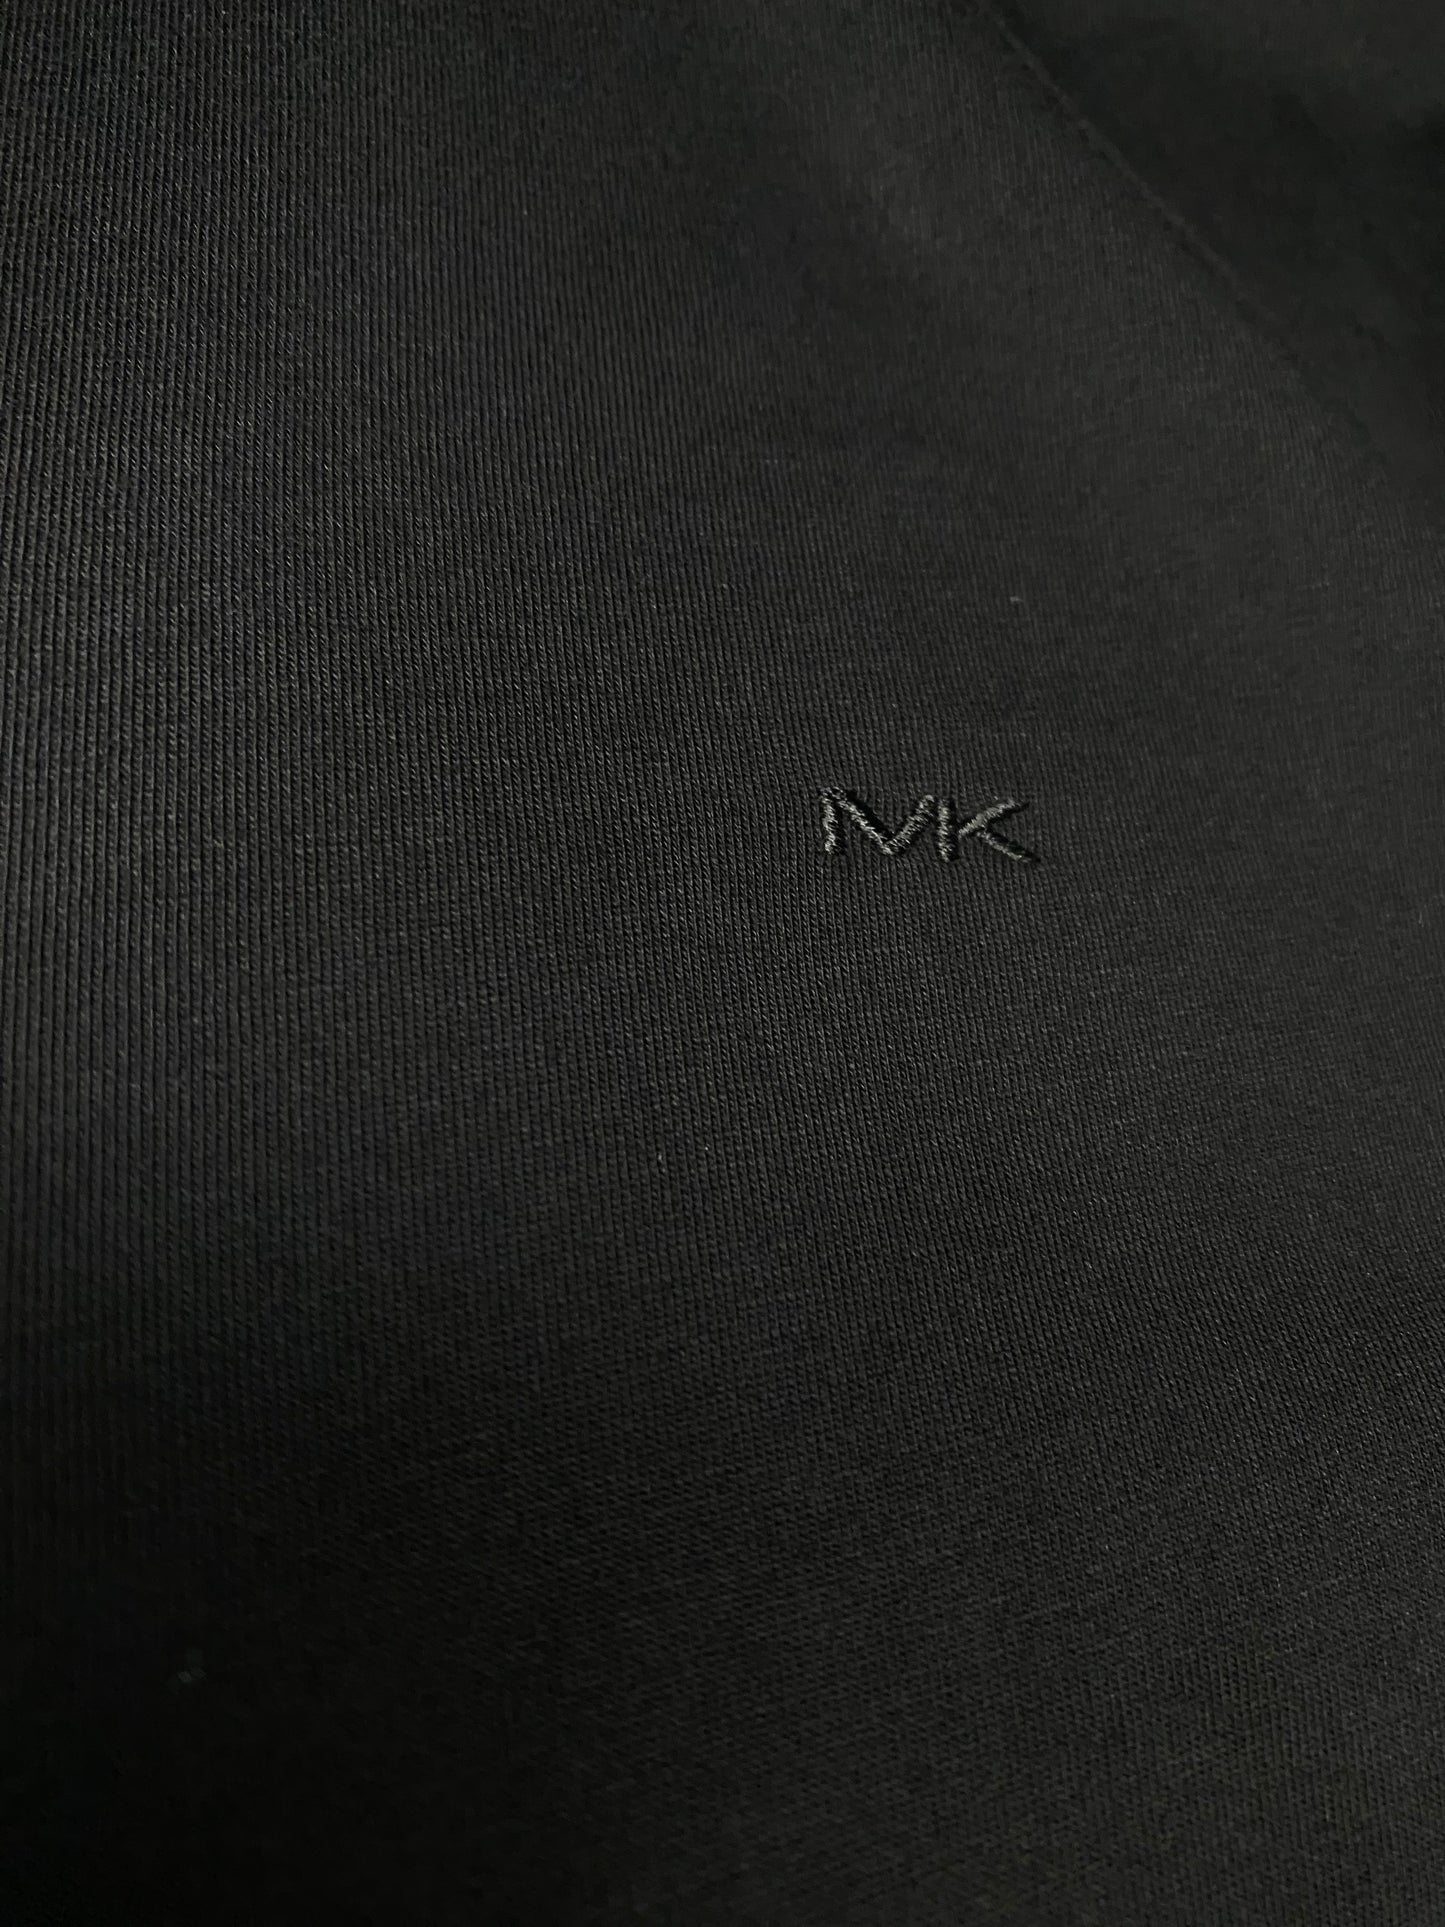 Michael Kors Collared Shirt